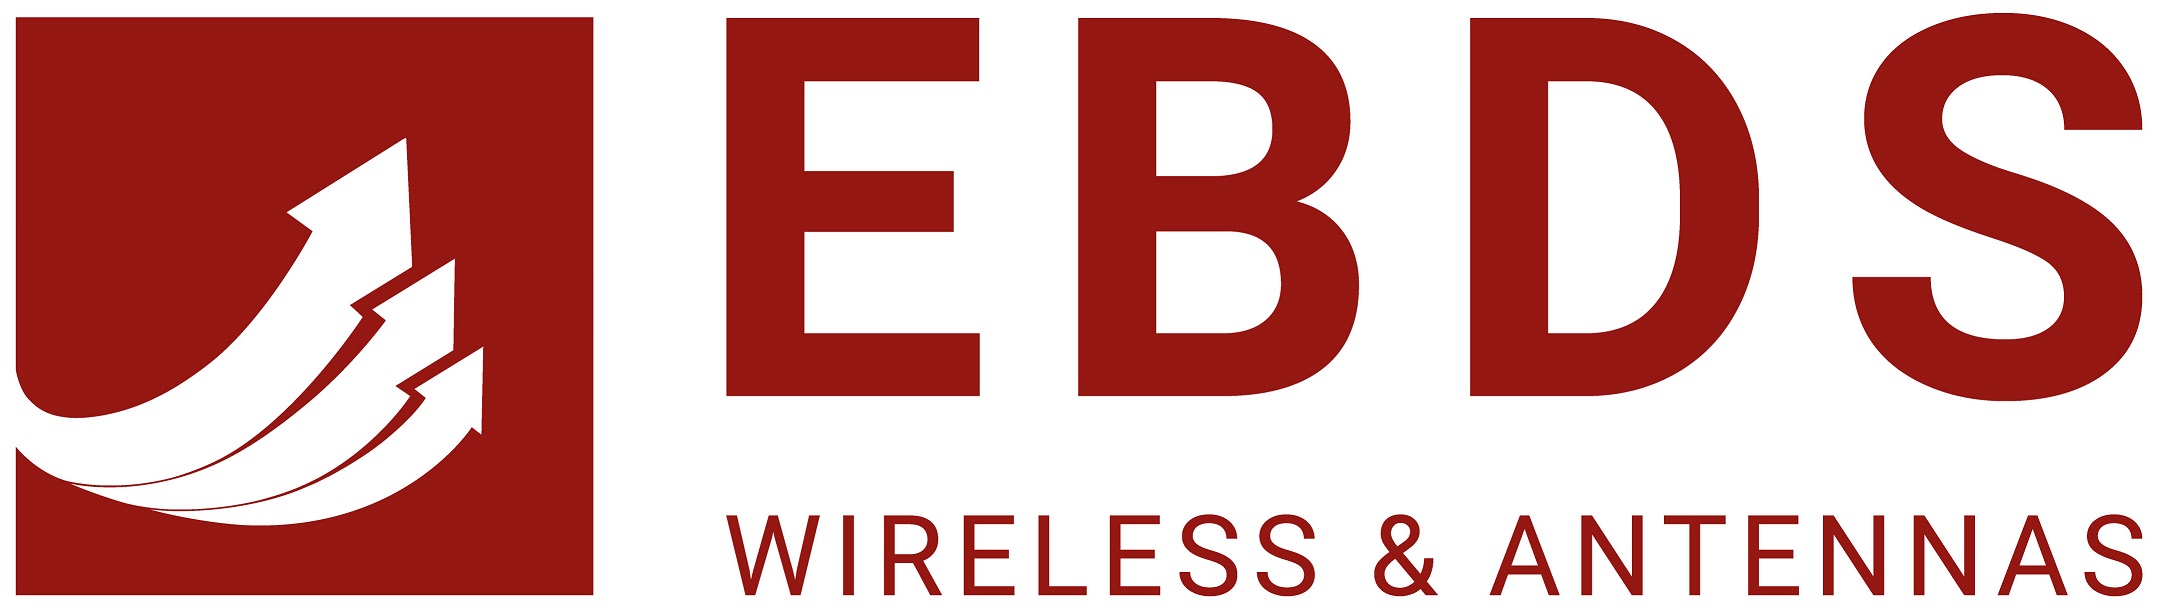 Logo EBDS WIRELESS & ANTENNAS